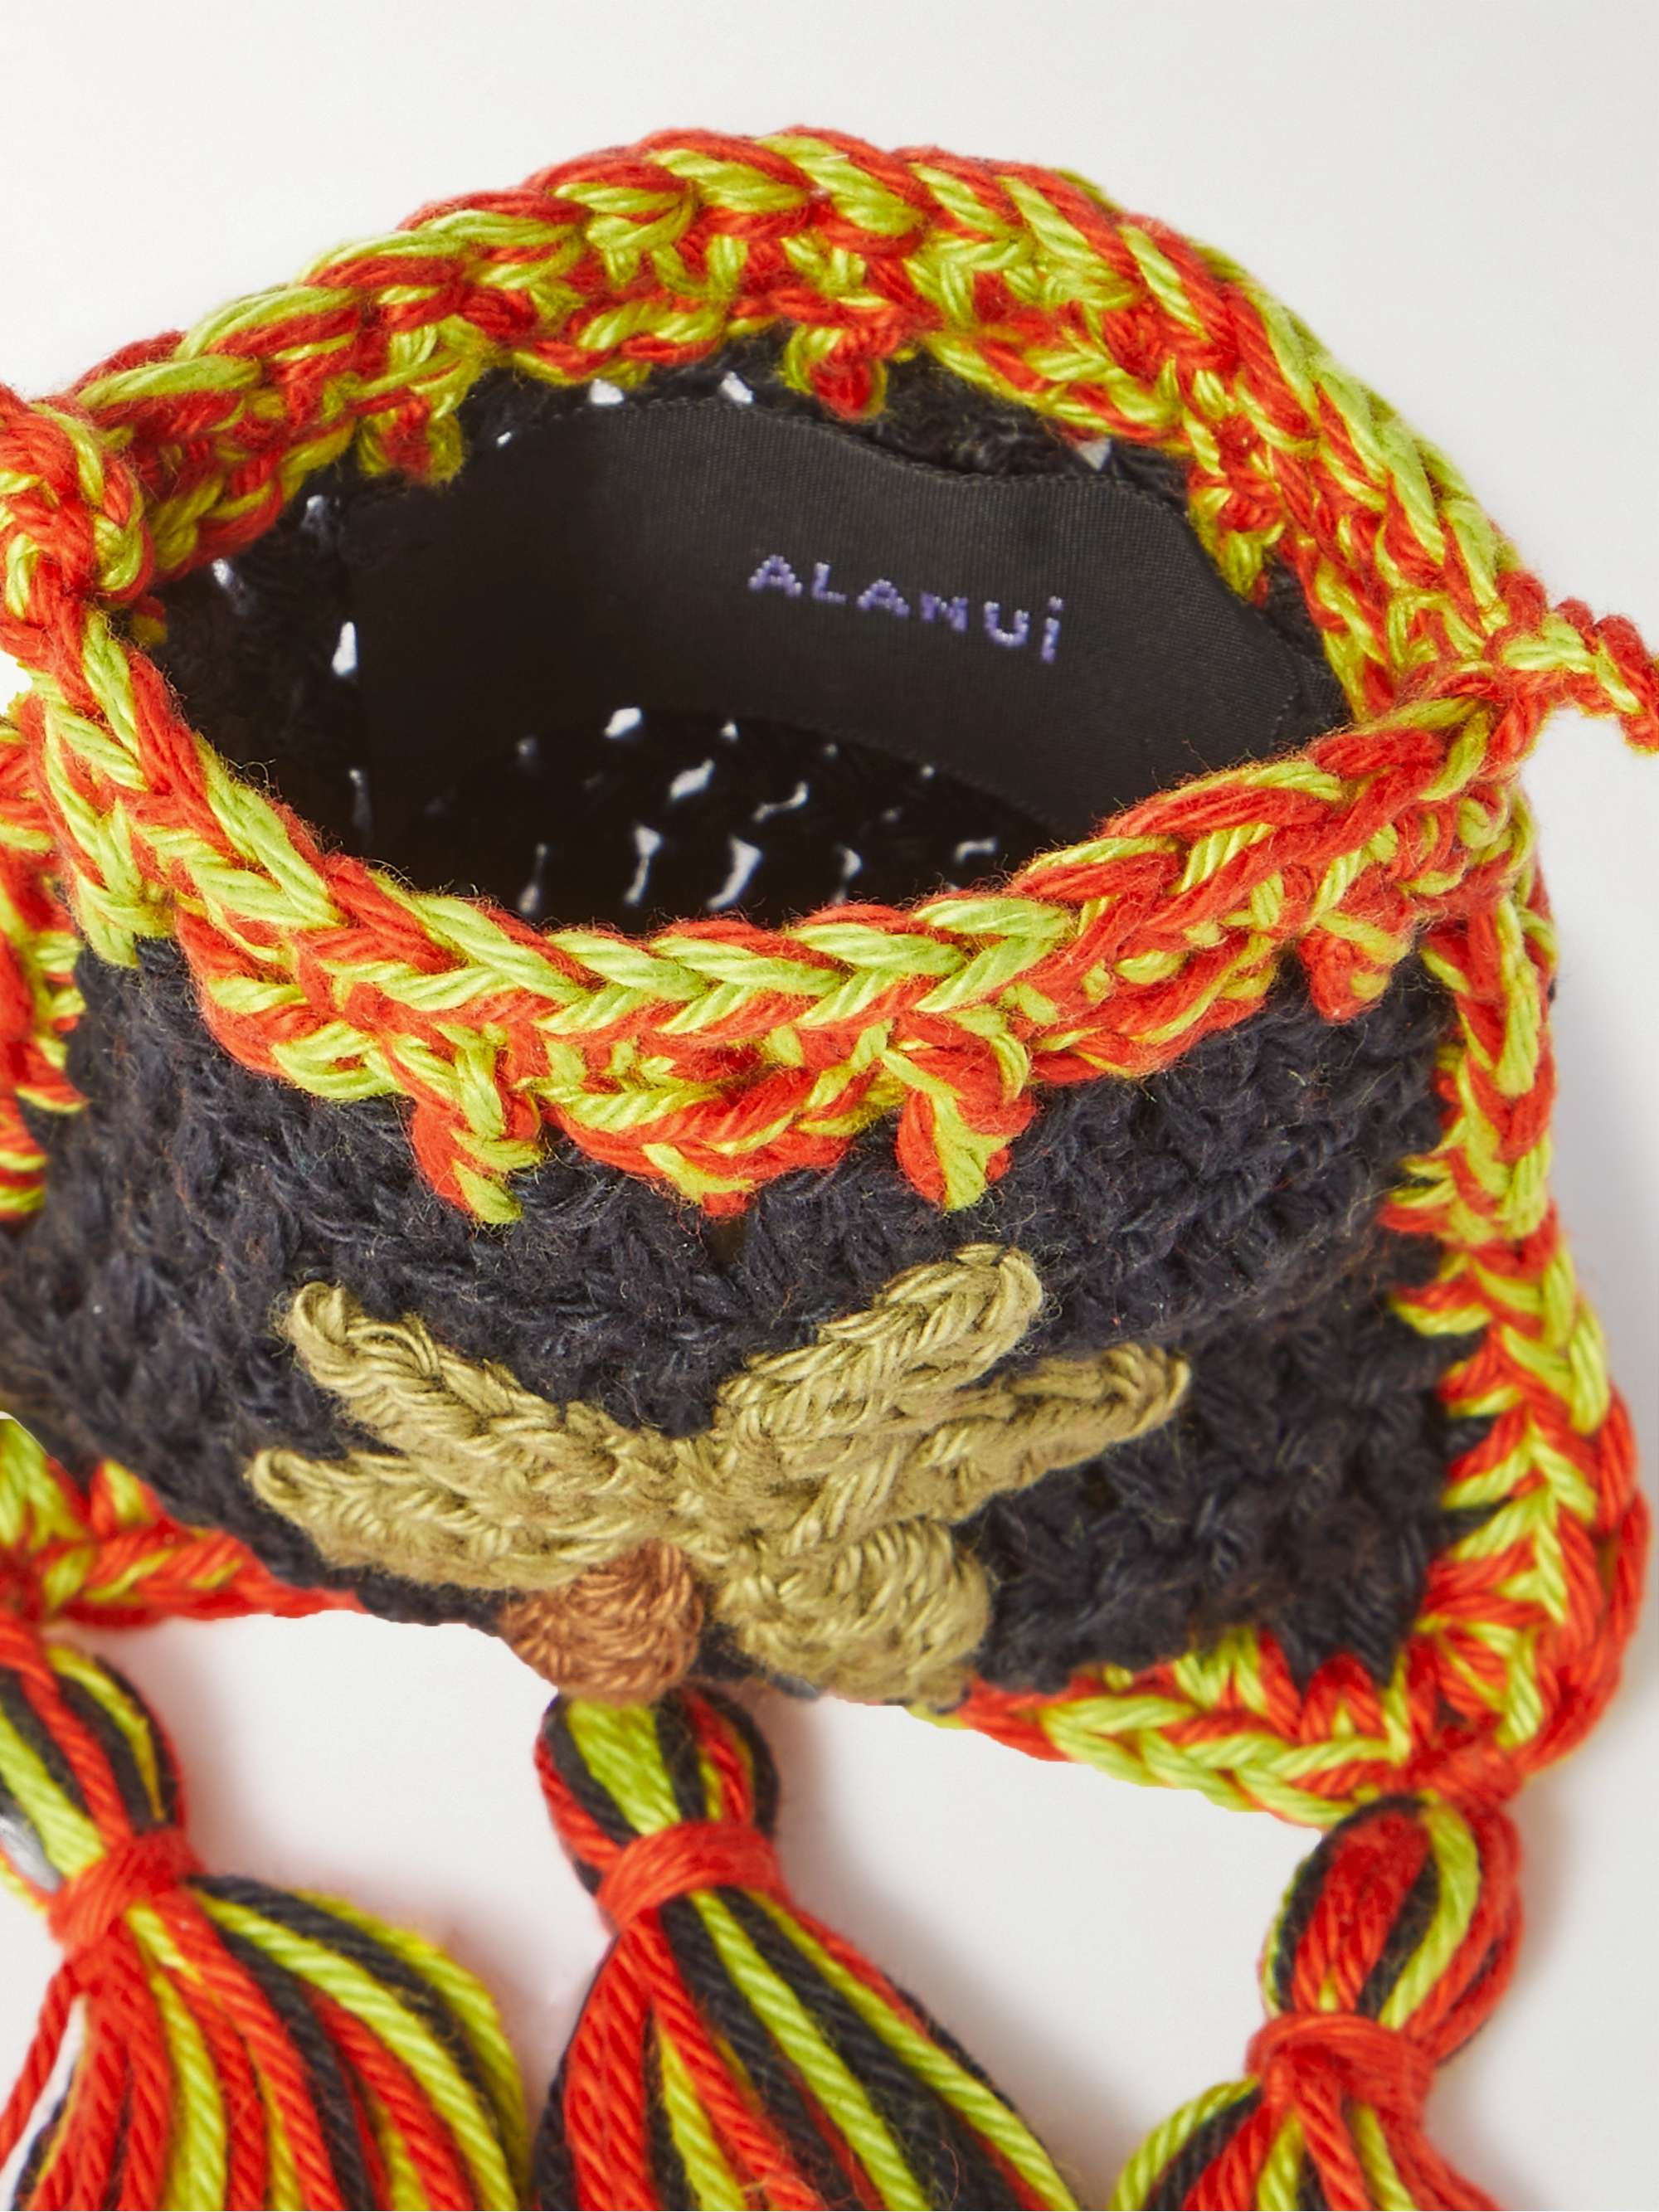 ALANUI Tasselled Crochet-Knit Cotton AirPods Case